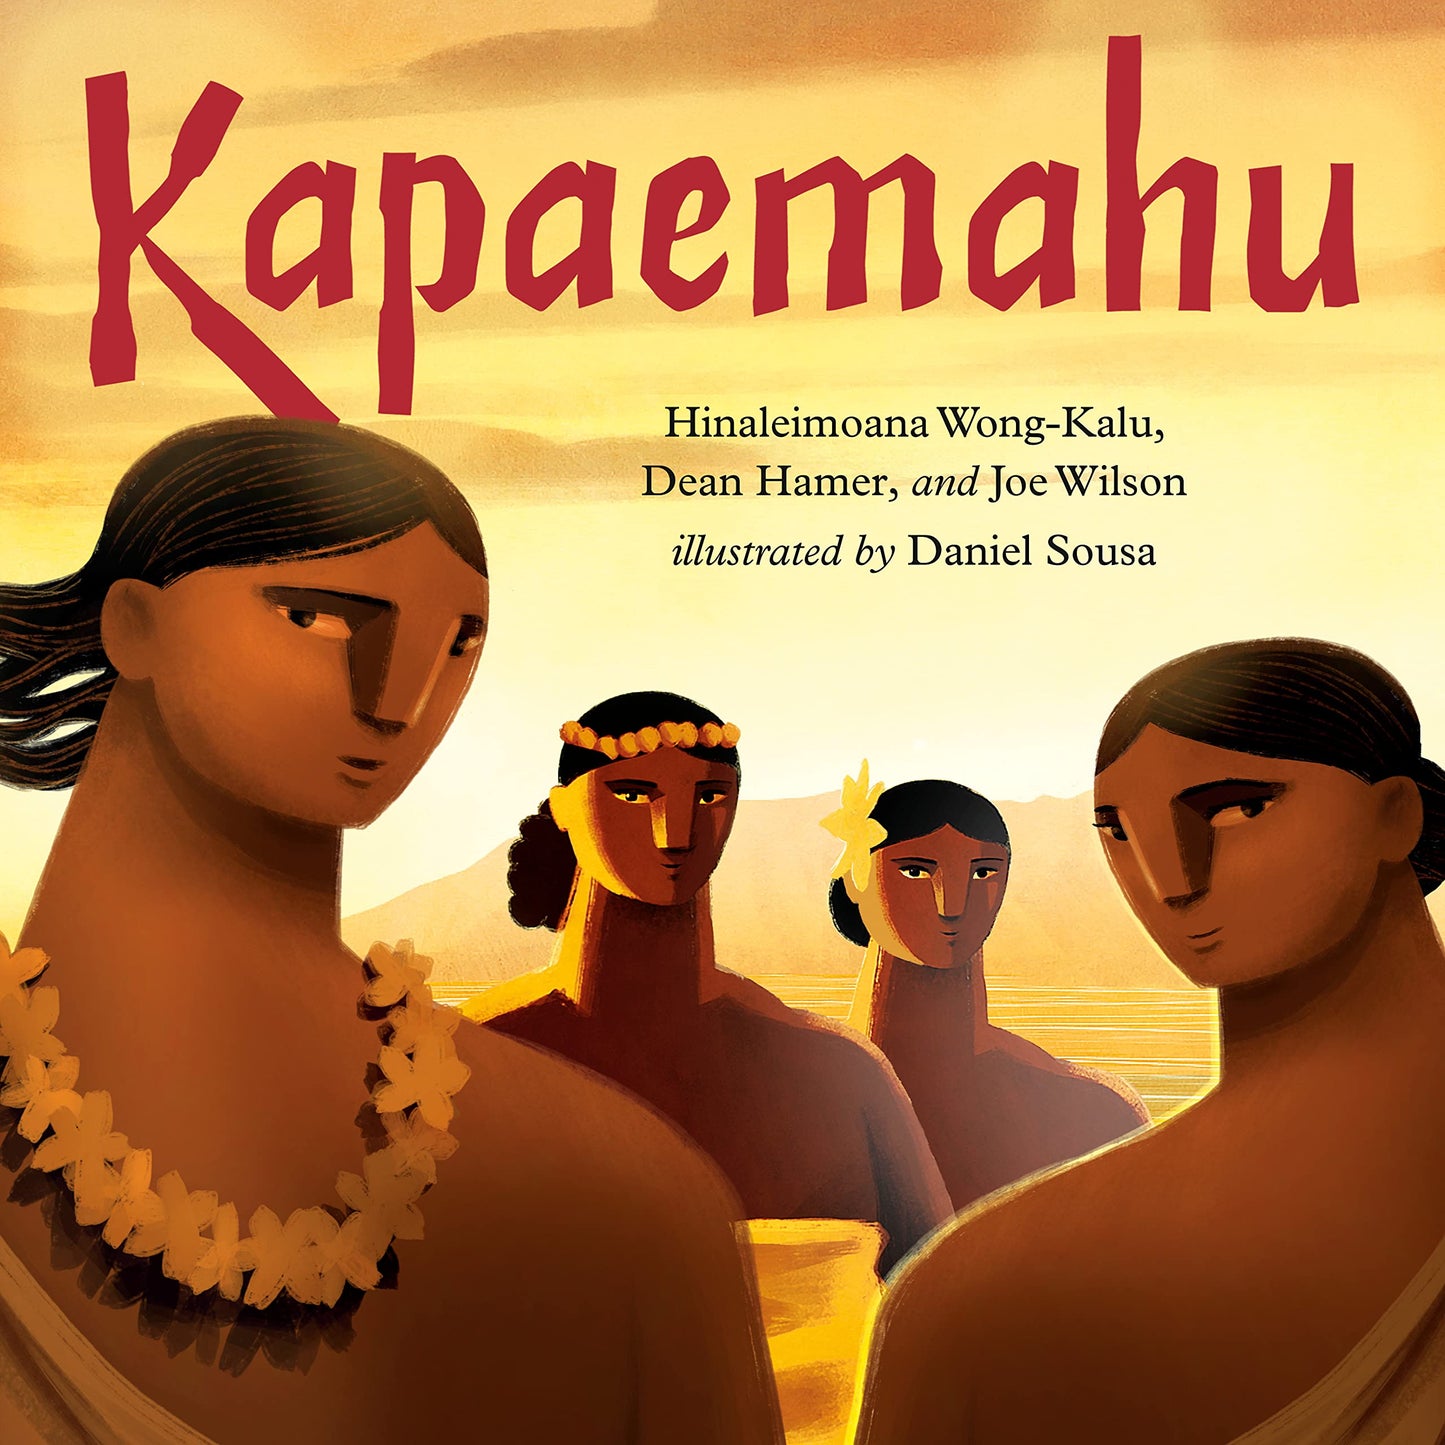 Kapaemahu, by Hinaleimoana Wong-Kalu, Dean Hamer, and Joe Wilson